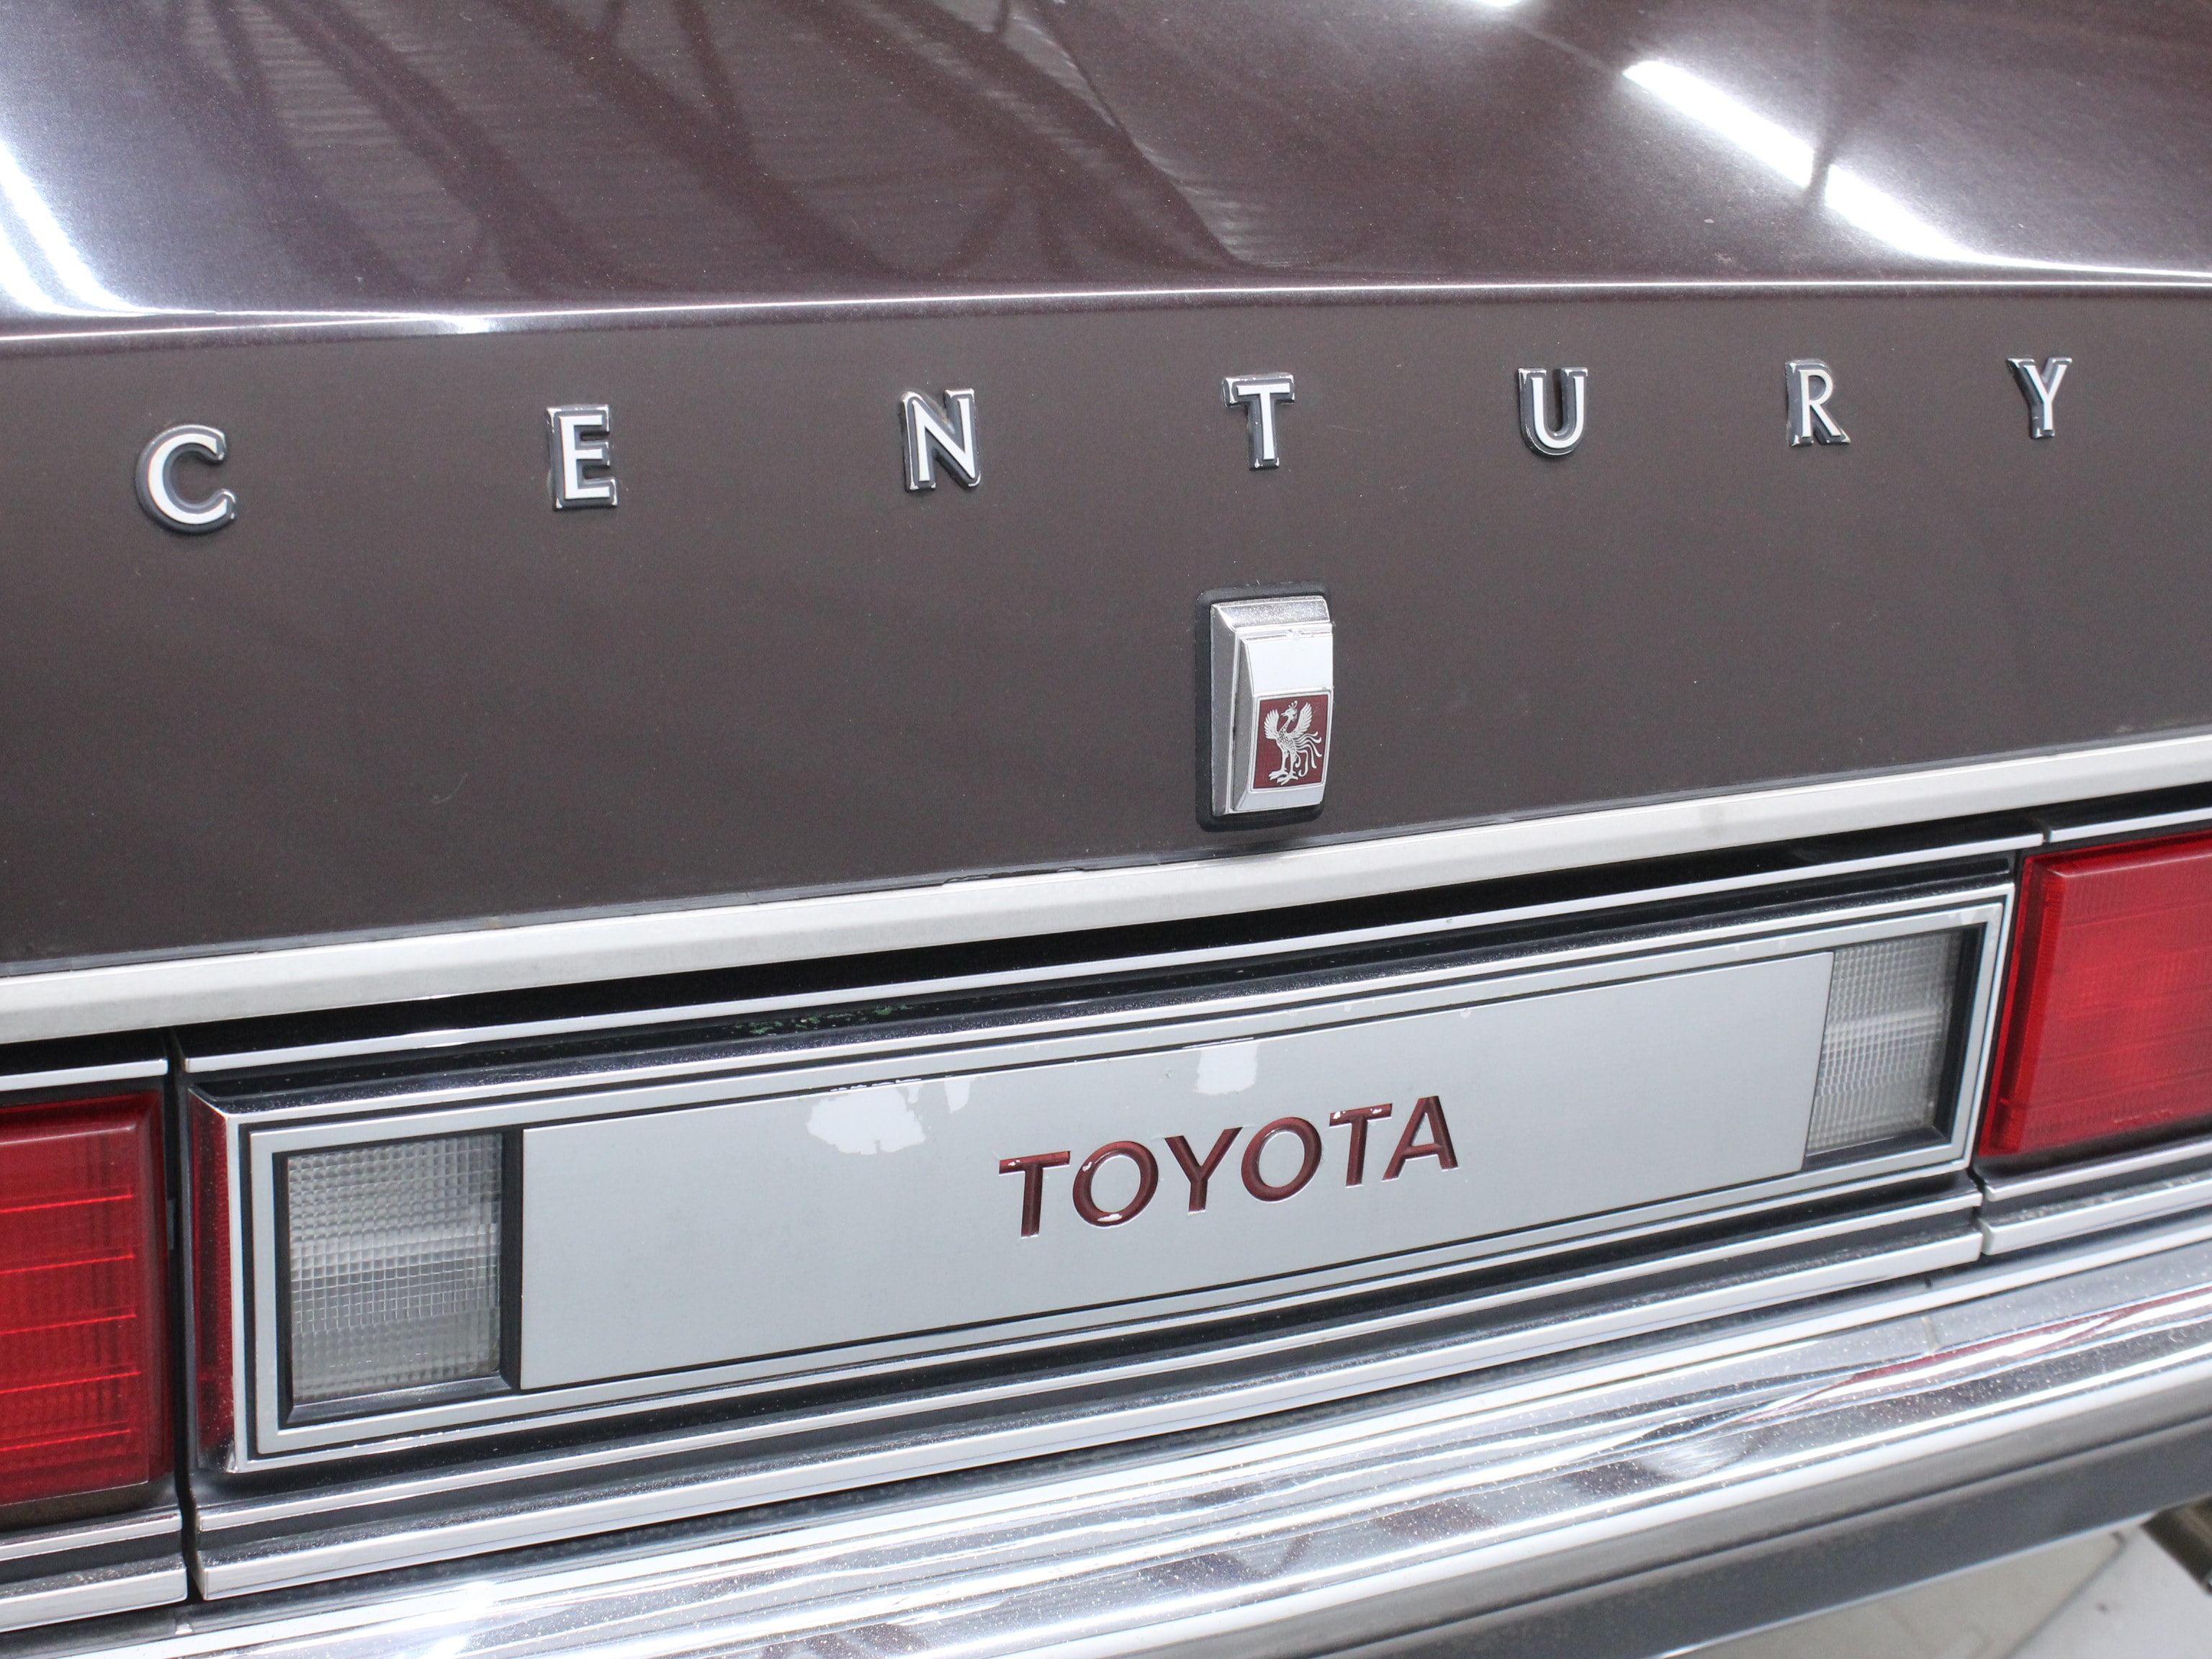 1984 Toyota Century 51